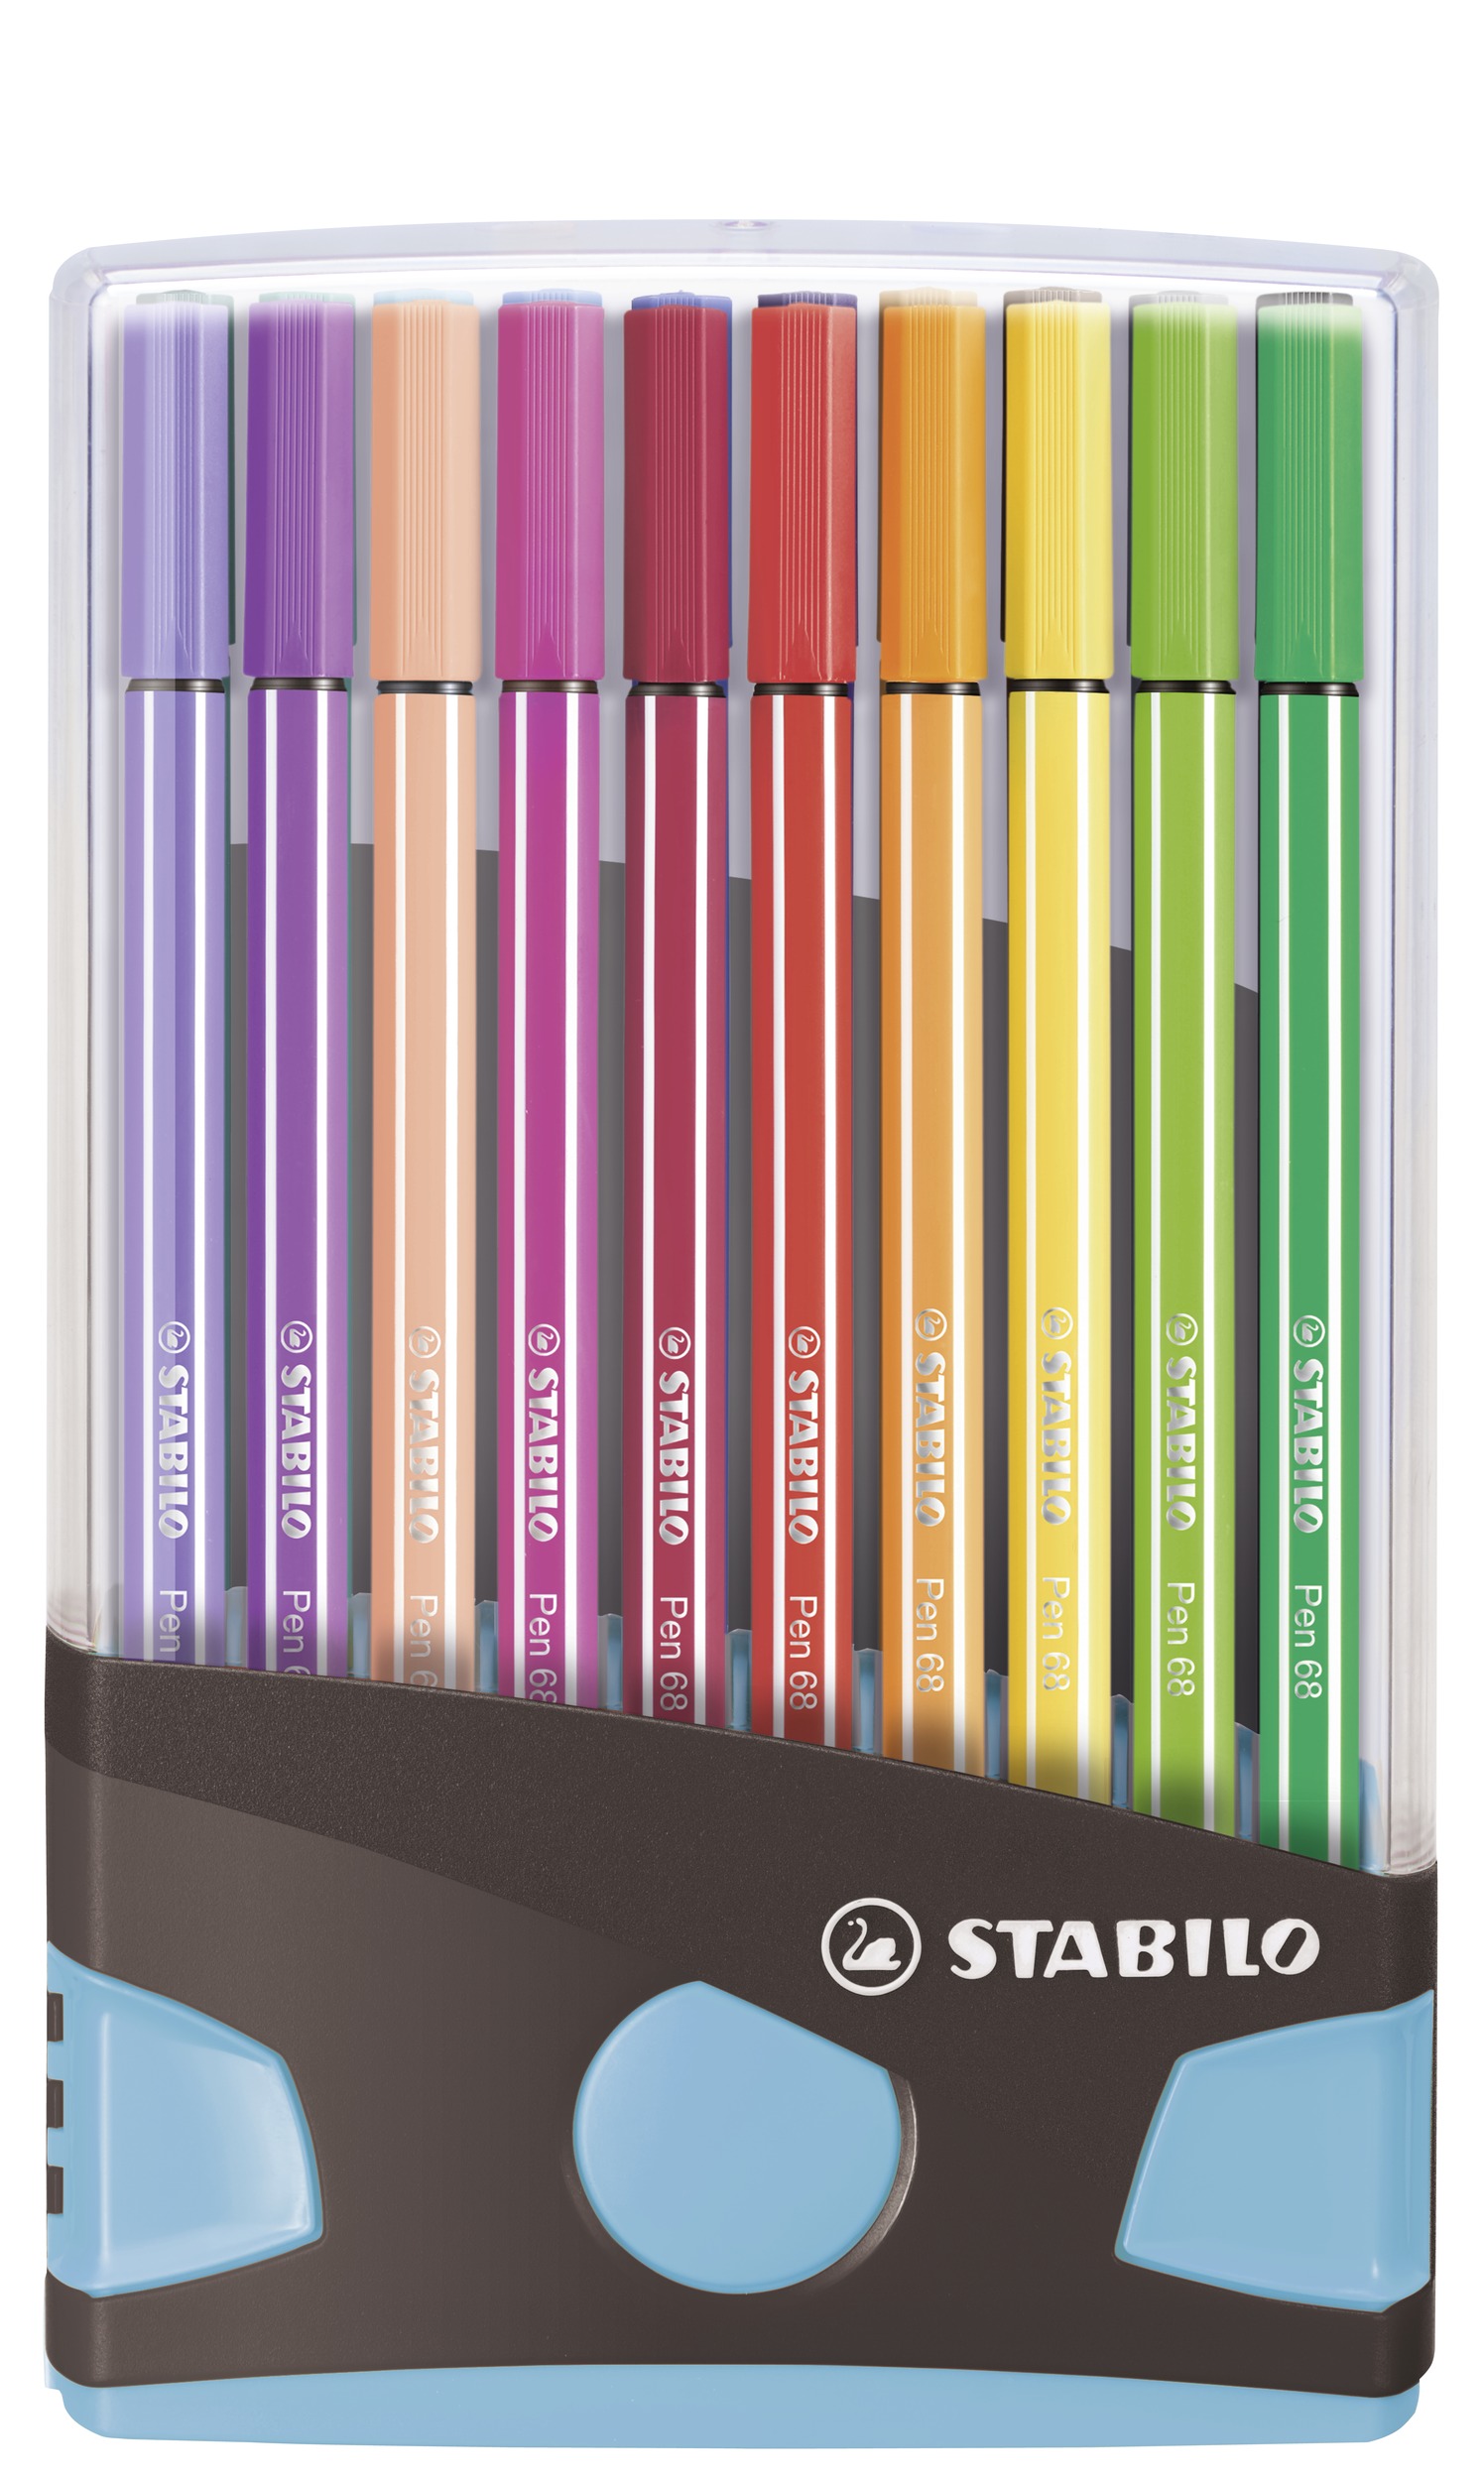 STABILO Pen 68 Premium-Filzstift ocker dunkel Einzelstift 